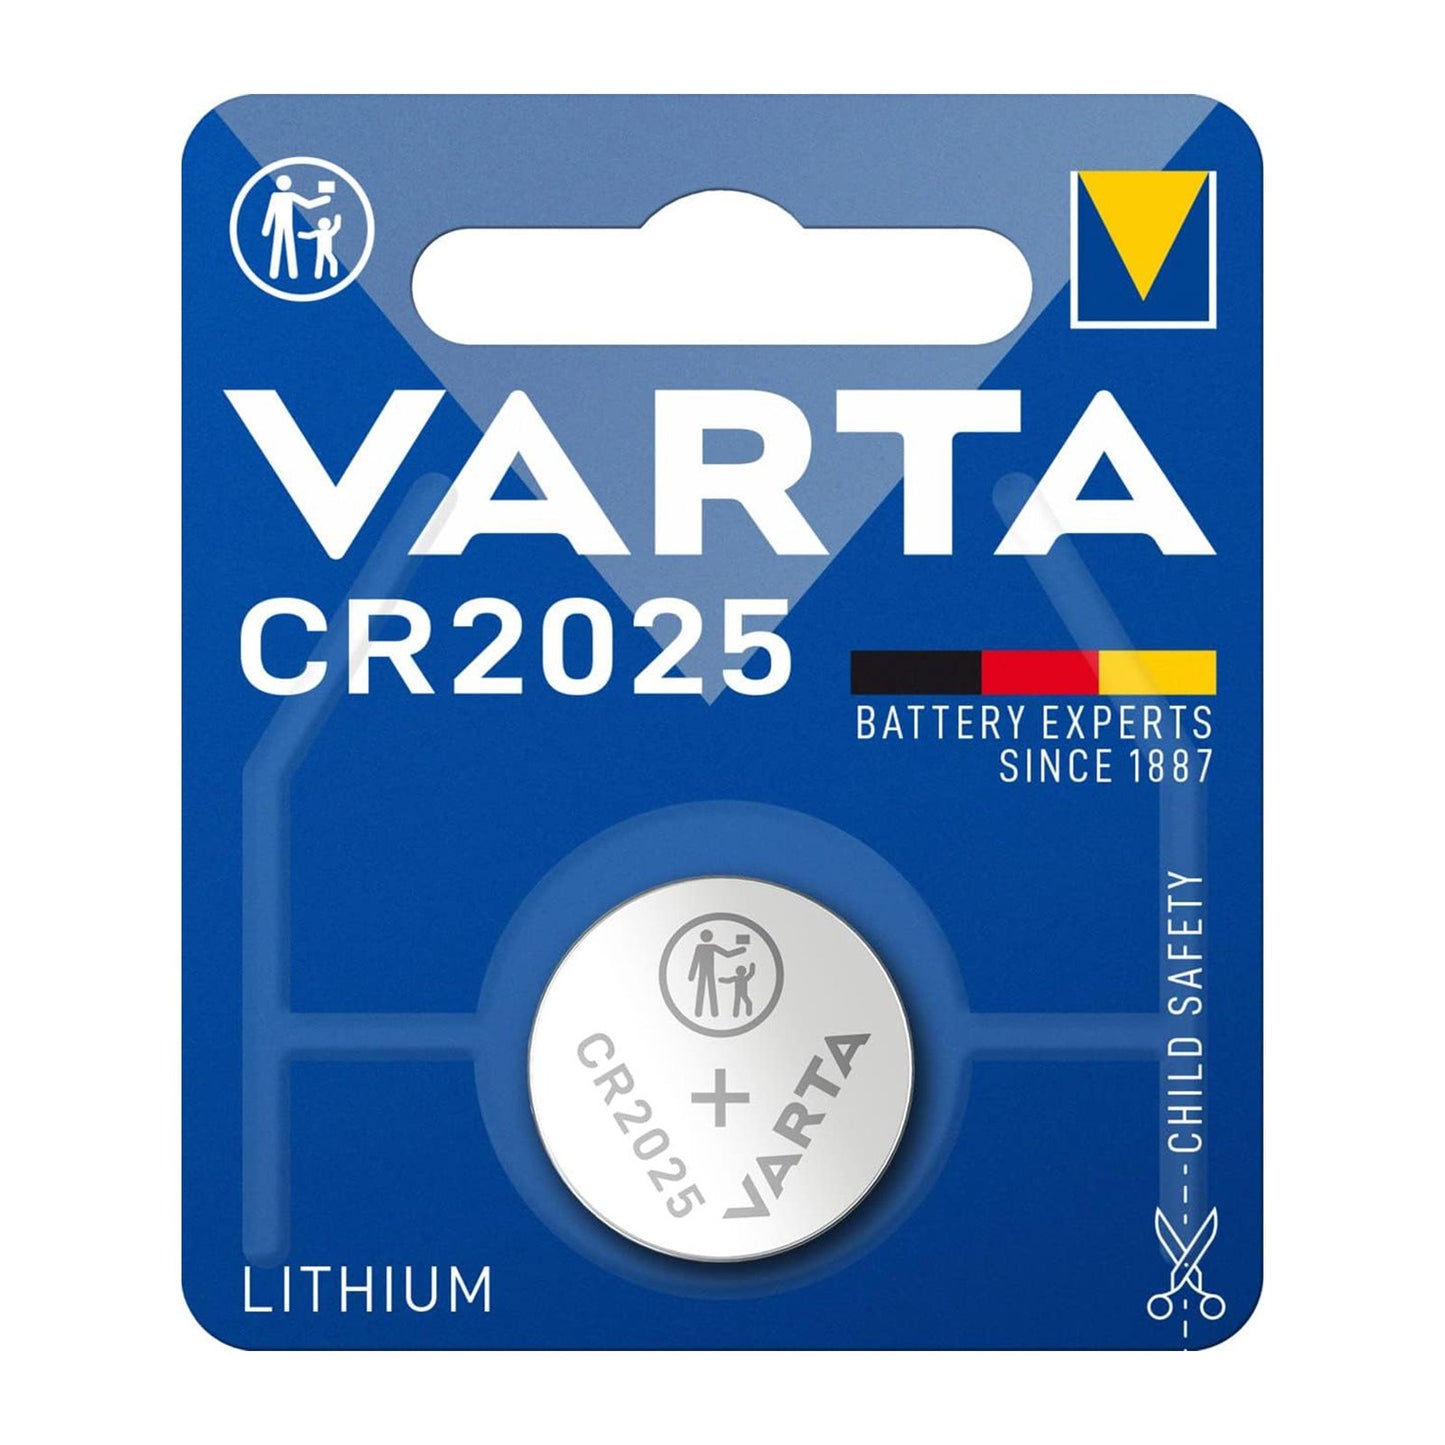 VARTA CR2025 Batteria al litio a bottone 3V, pila piatta, specialistica, Diametro 20mm